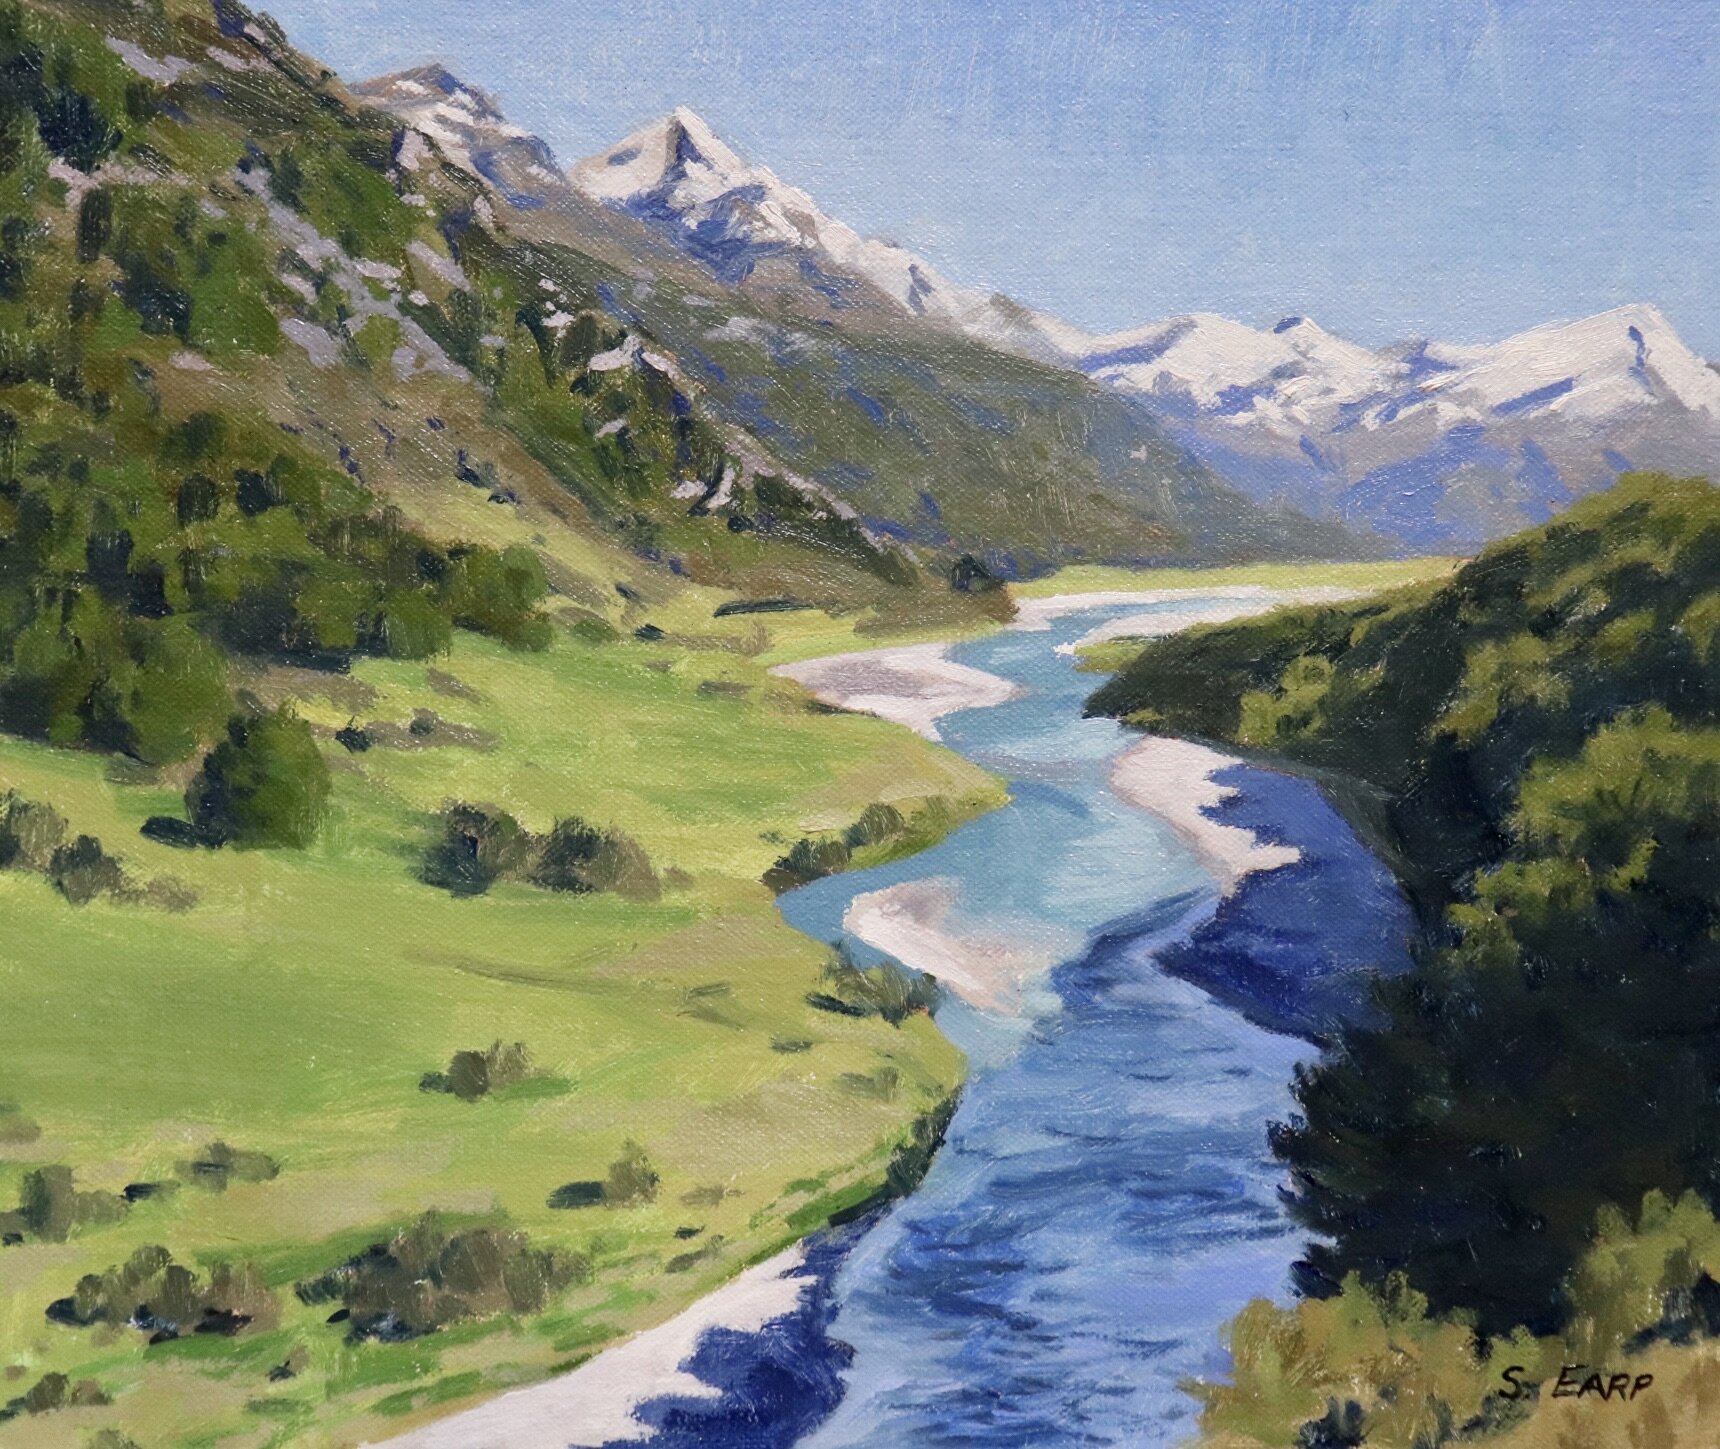 Rees Valley - Oil Painting - Samuel Earp - Landscape Artist.jpeg